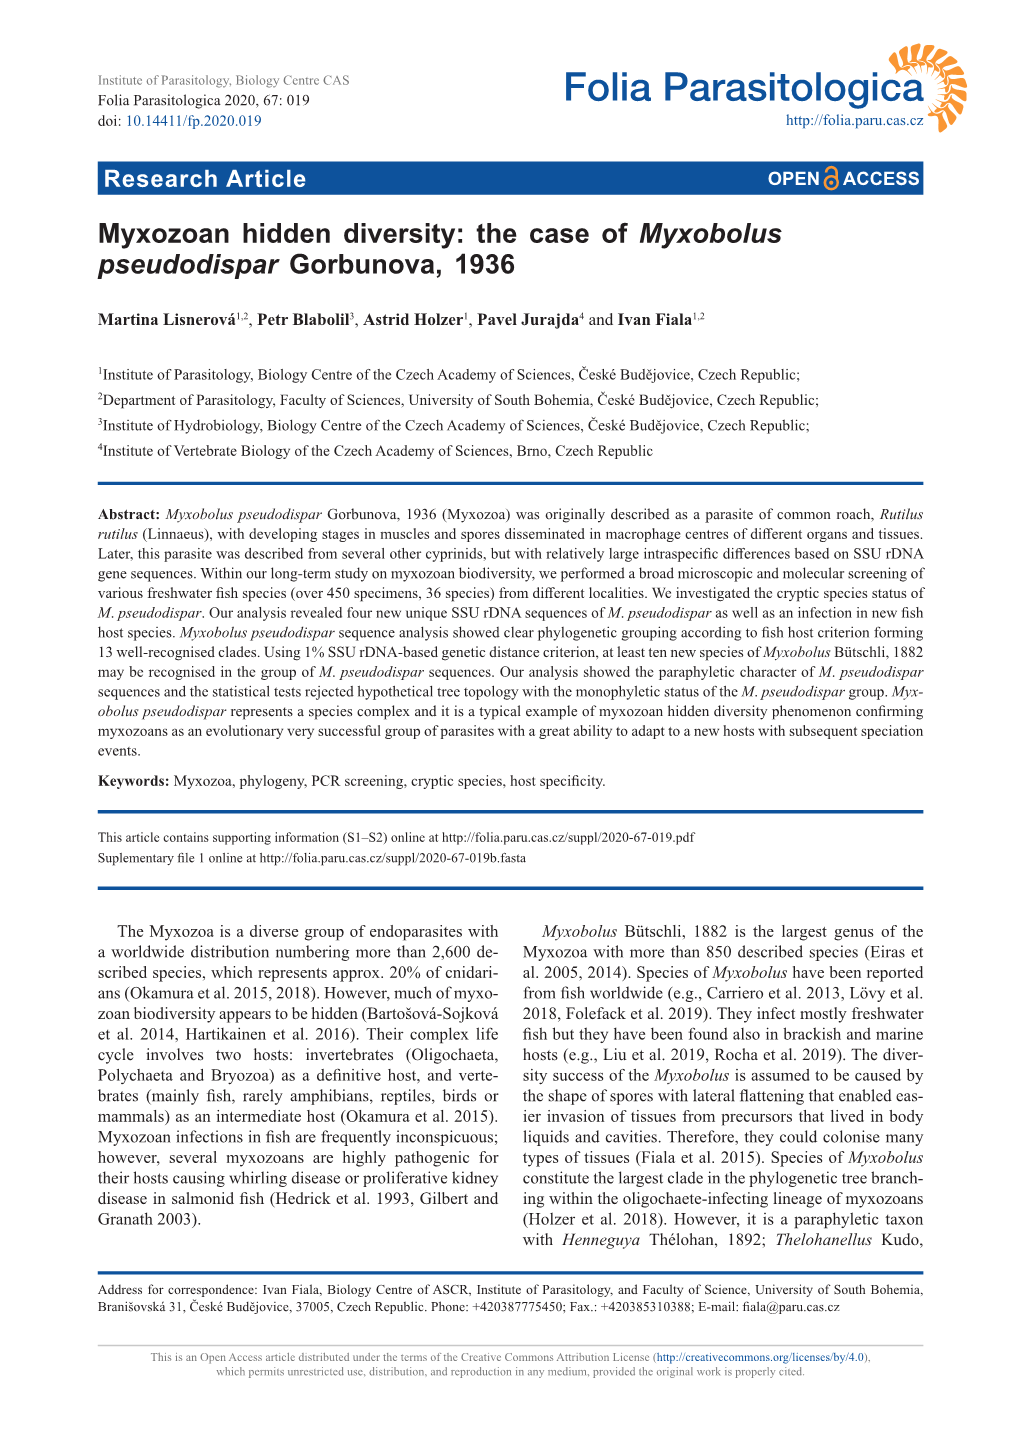 Myxozoan Hidden Diversity: the Case of Myxobolus Pseudodispar Gorbunova, 1936